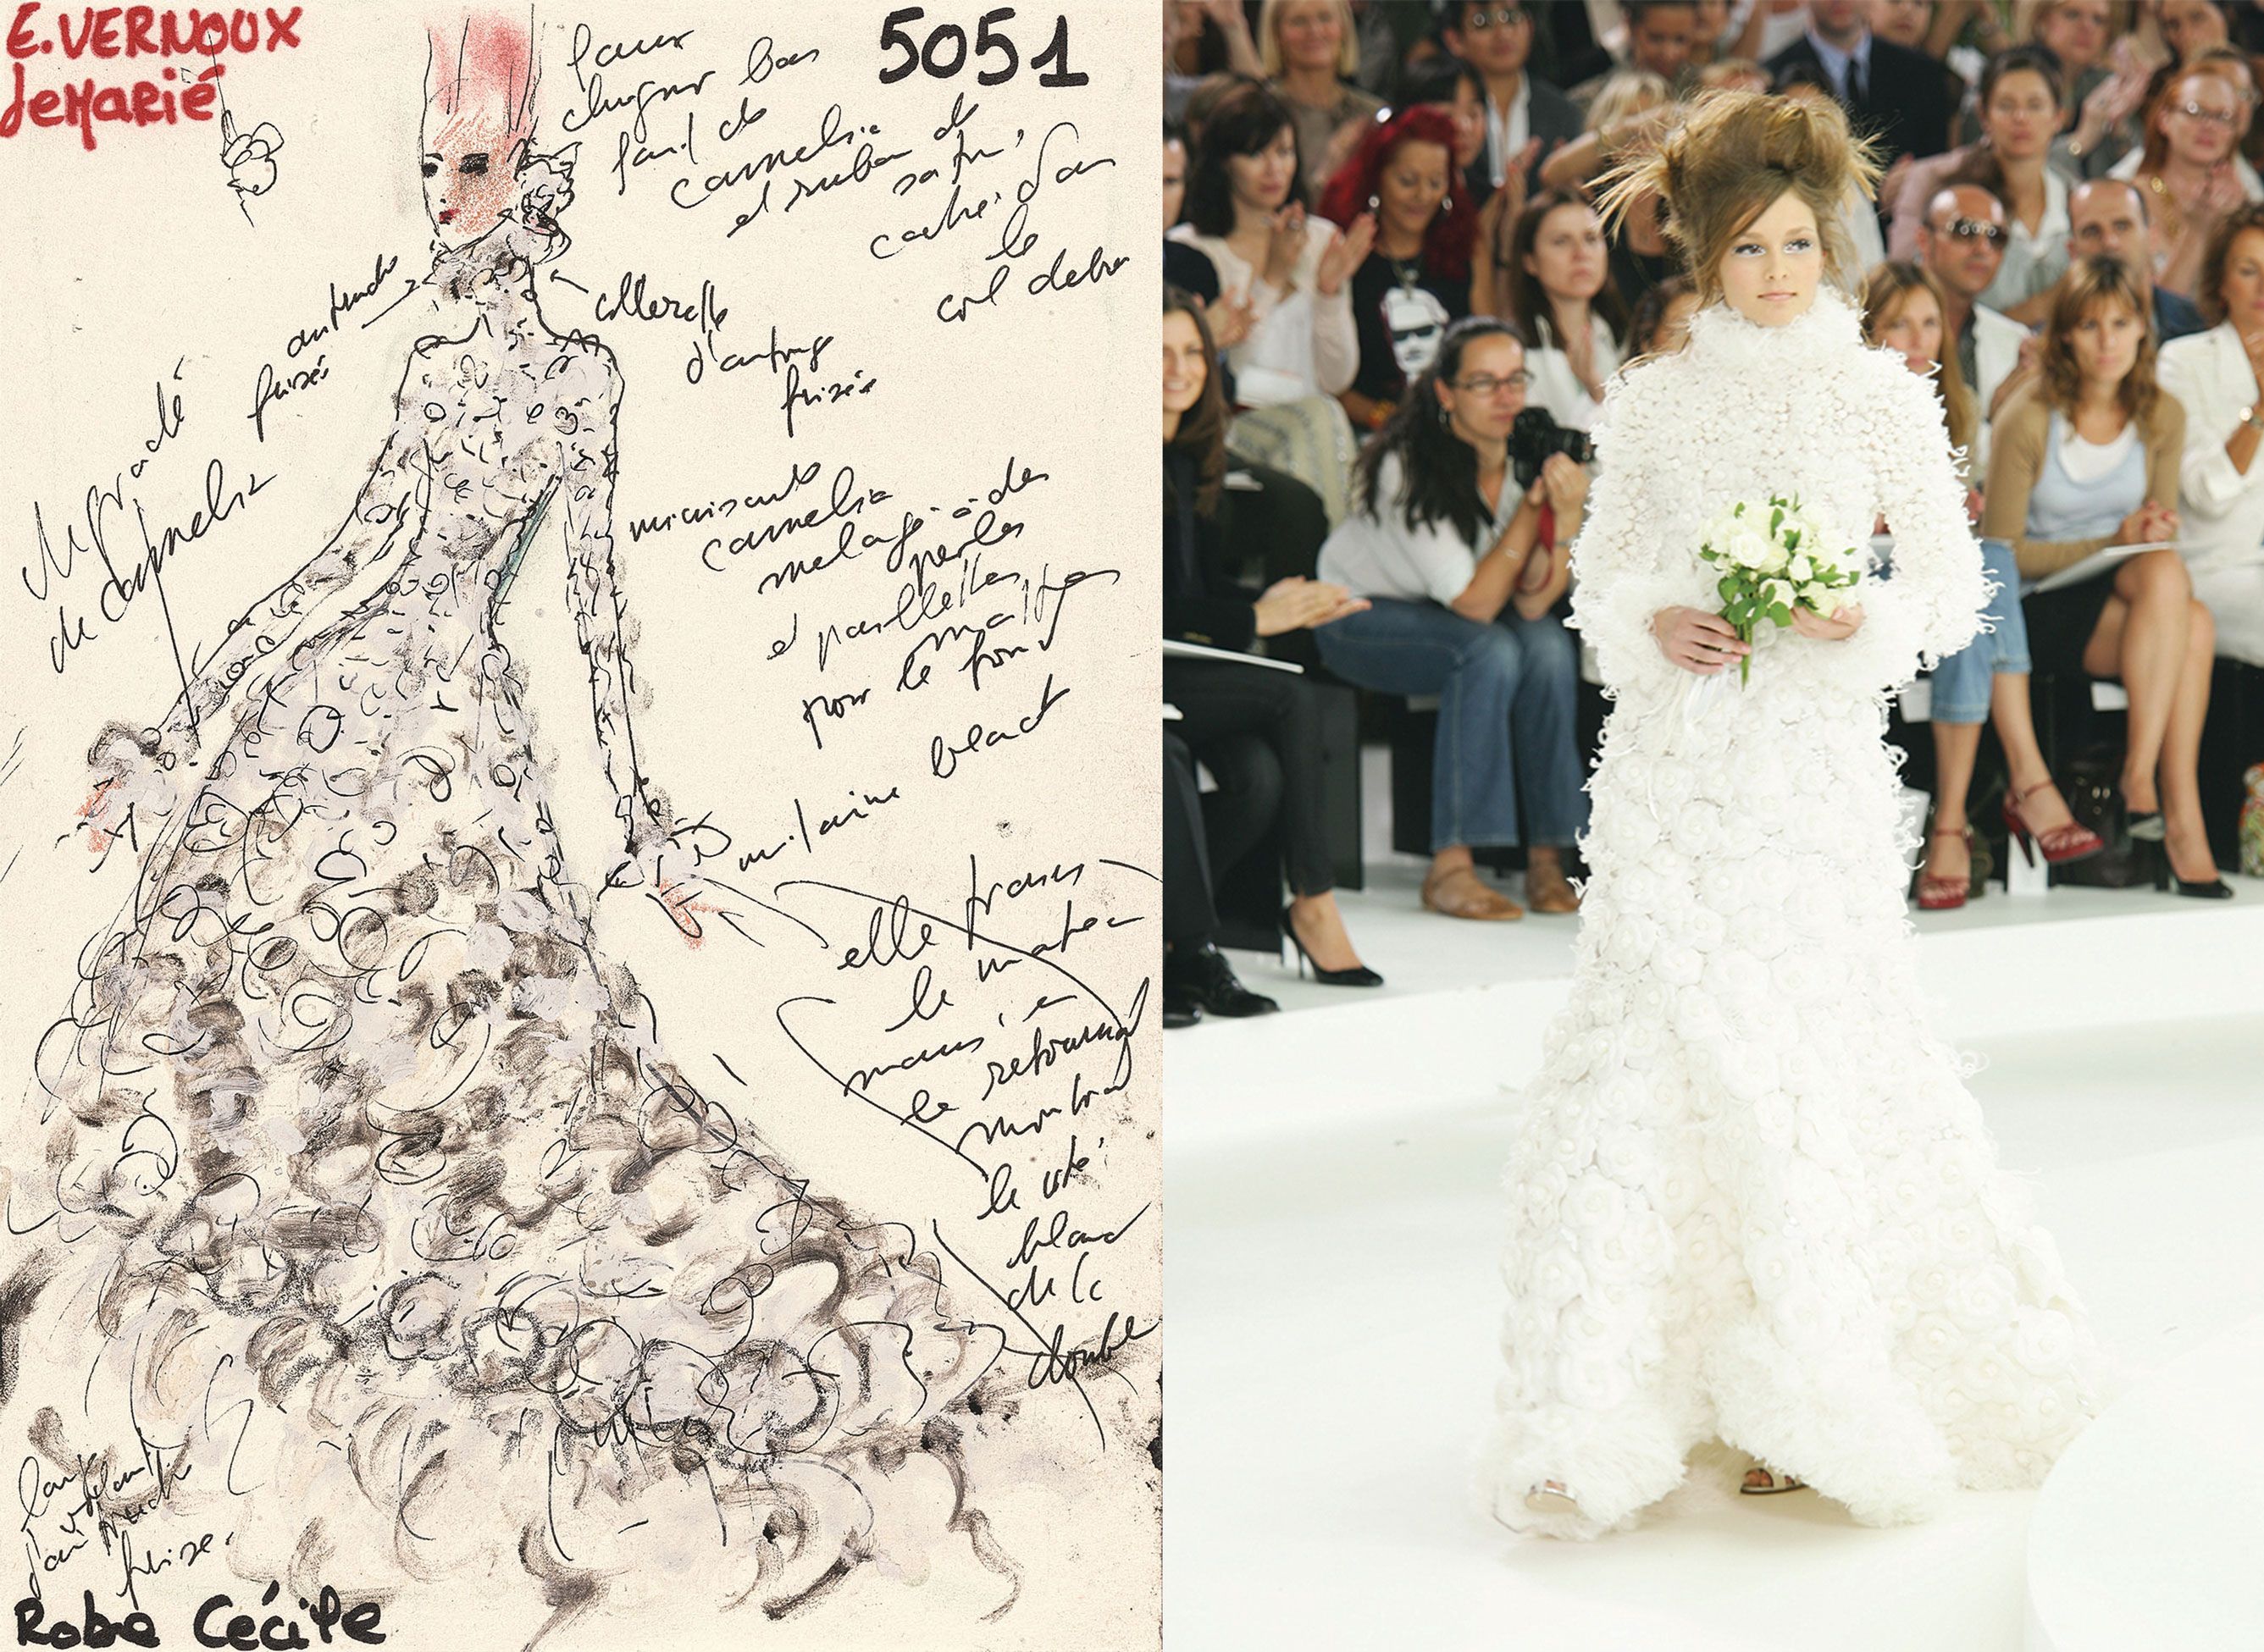 Karl Lagerfeld dead at 85 the Chanel designer revolutionized fashion  Vox